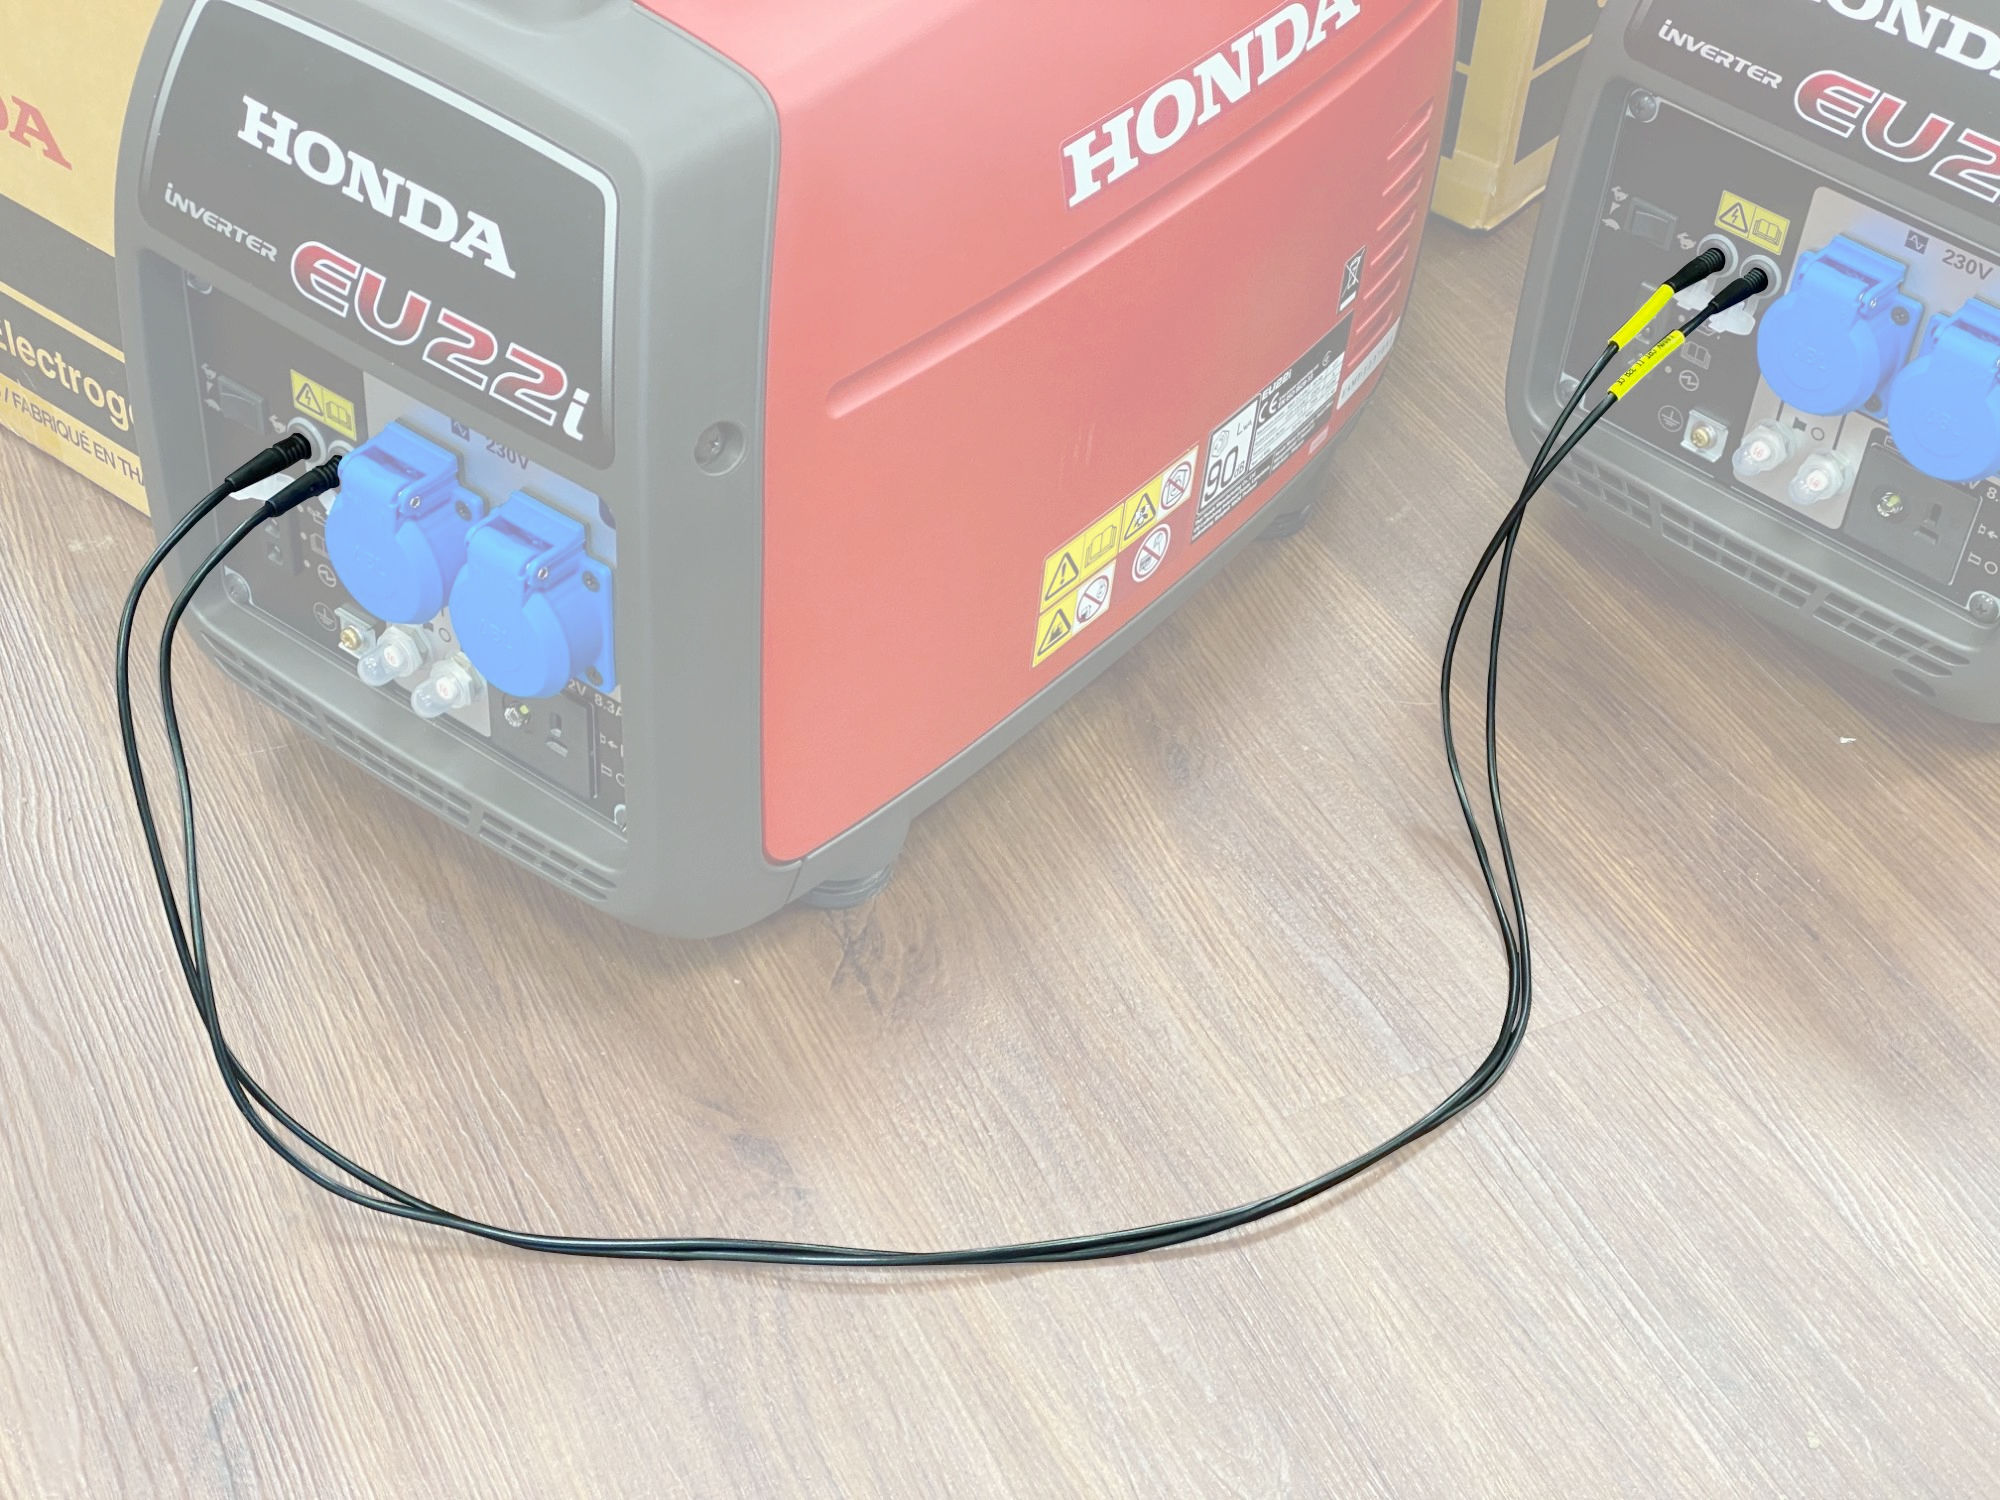 Honda EU22i Stromerzeuger günstig kaufen